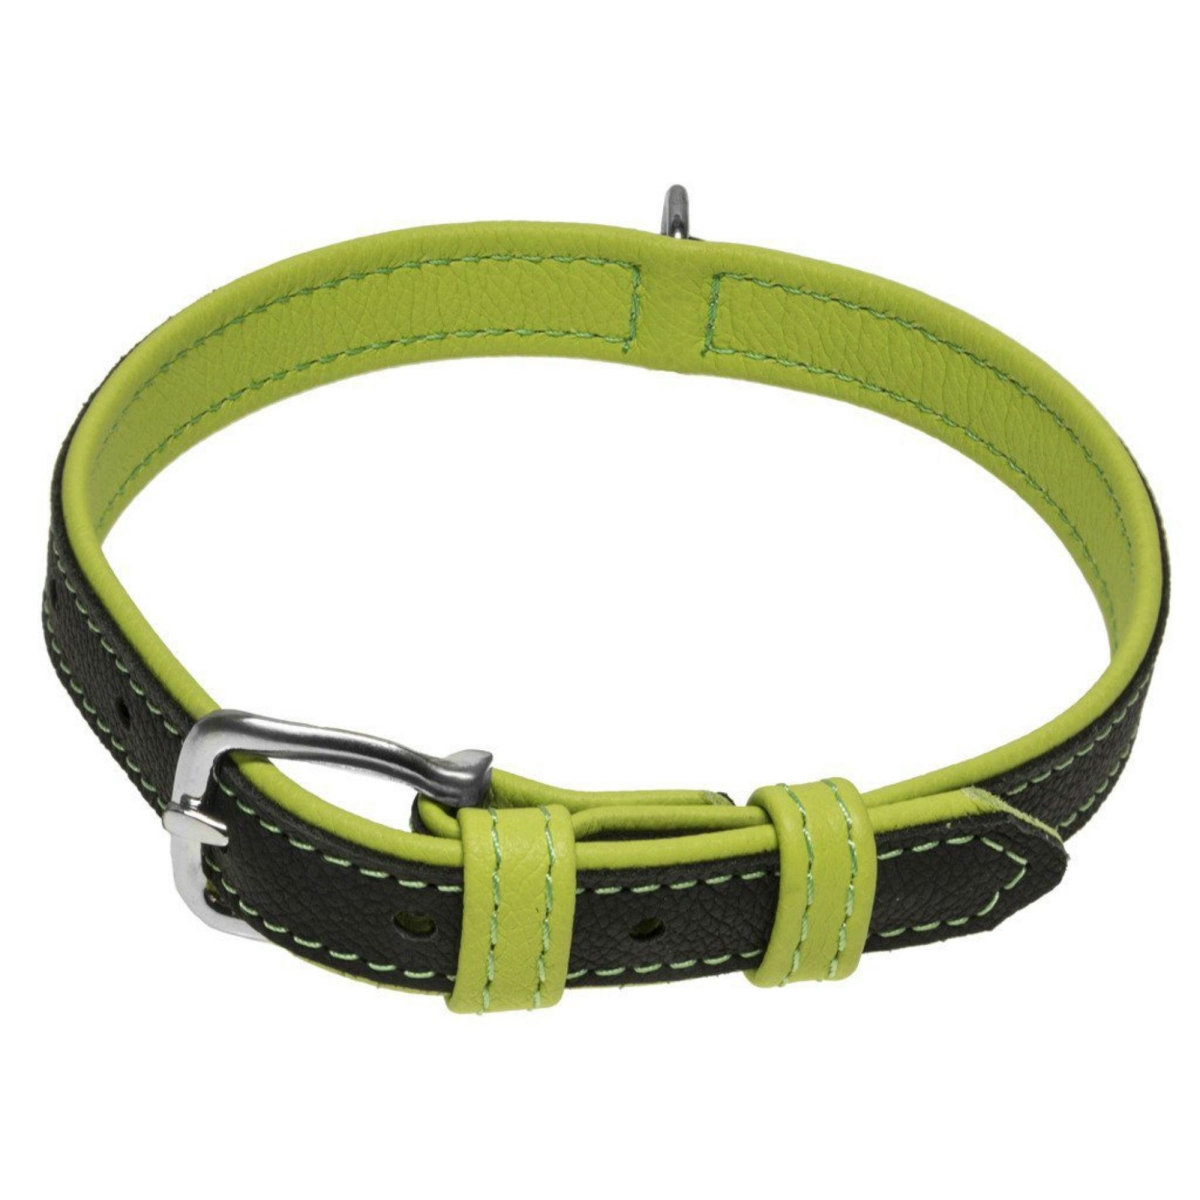 Dog Line L1012-lime-md Soft Leather Dual Color Dog Collar, Lime Green - Medium